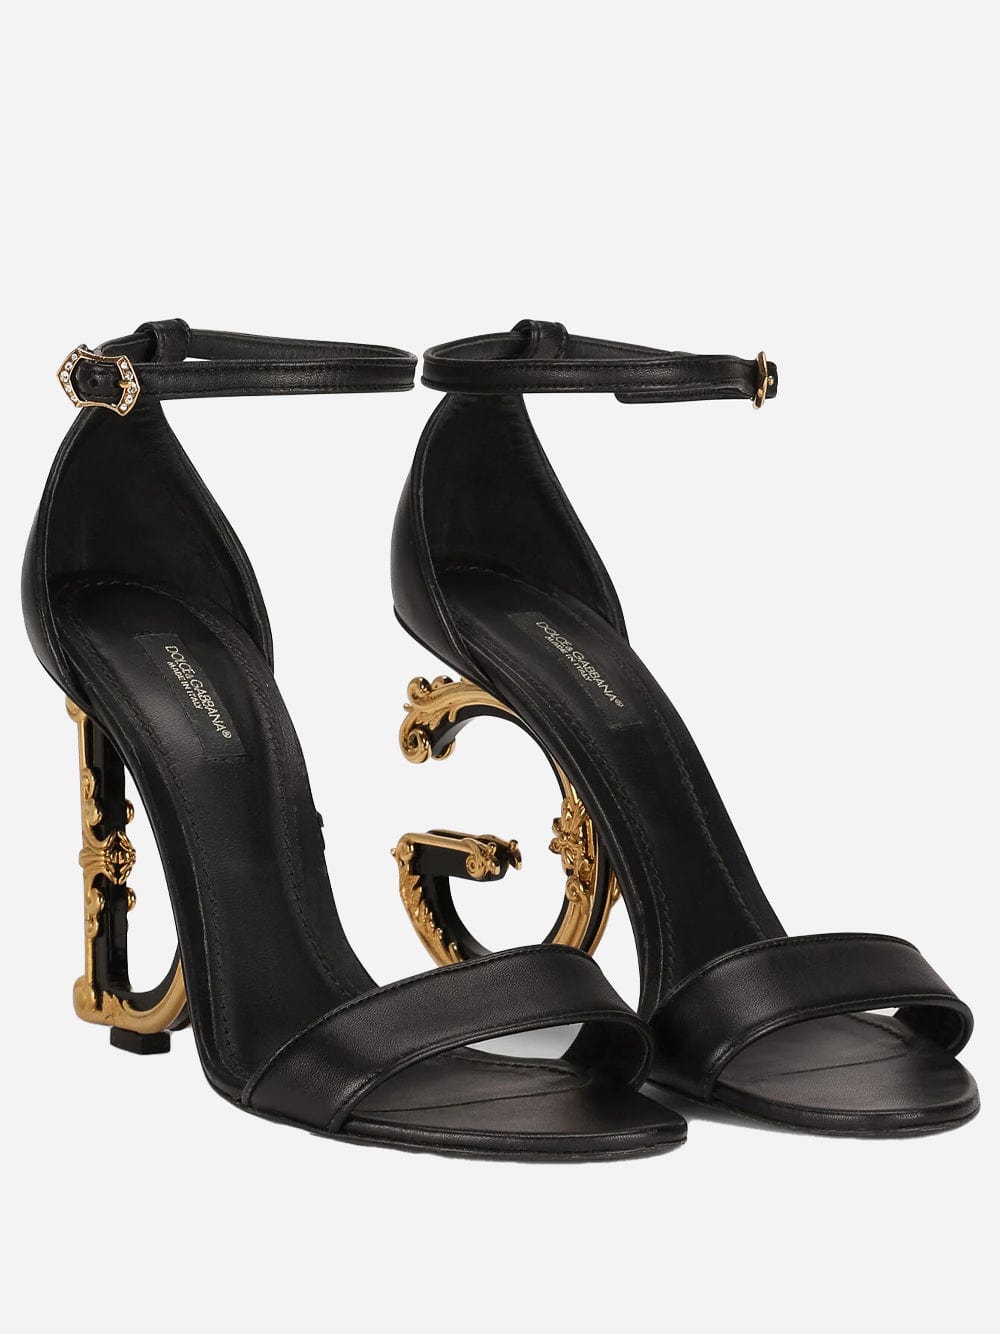 Dolce & Gabbana Baroque DG Ankle Strap Sandals